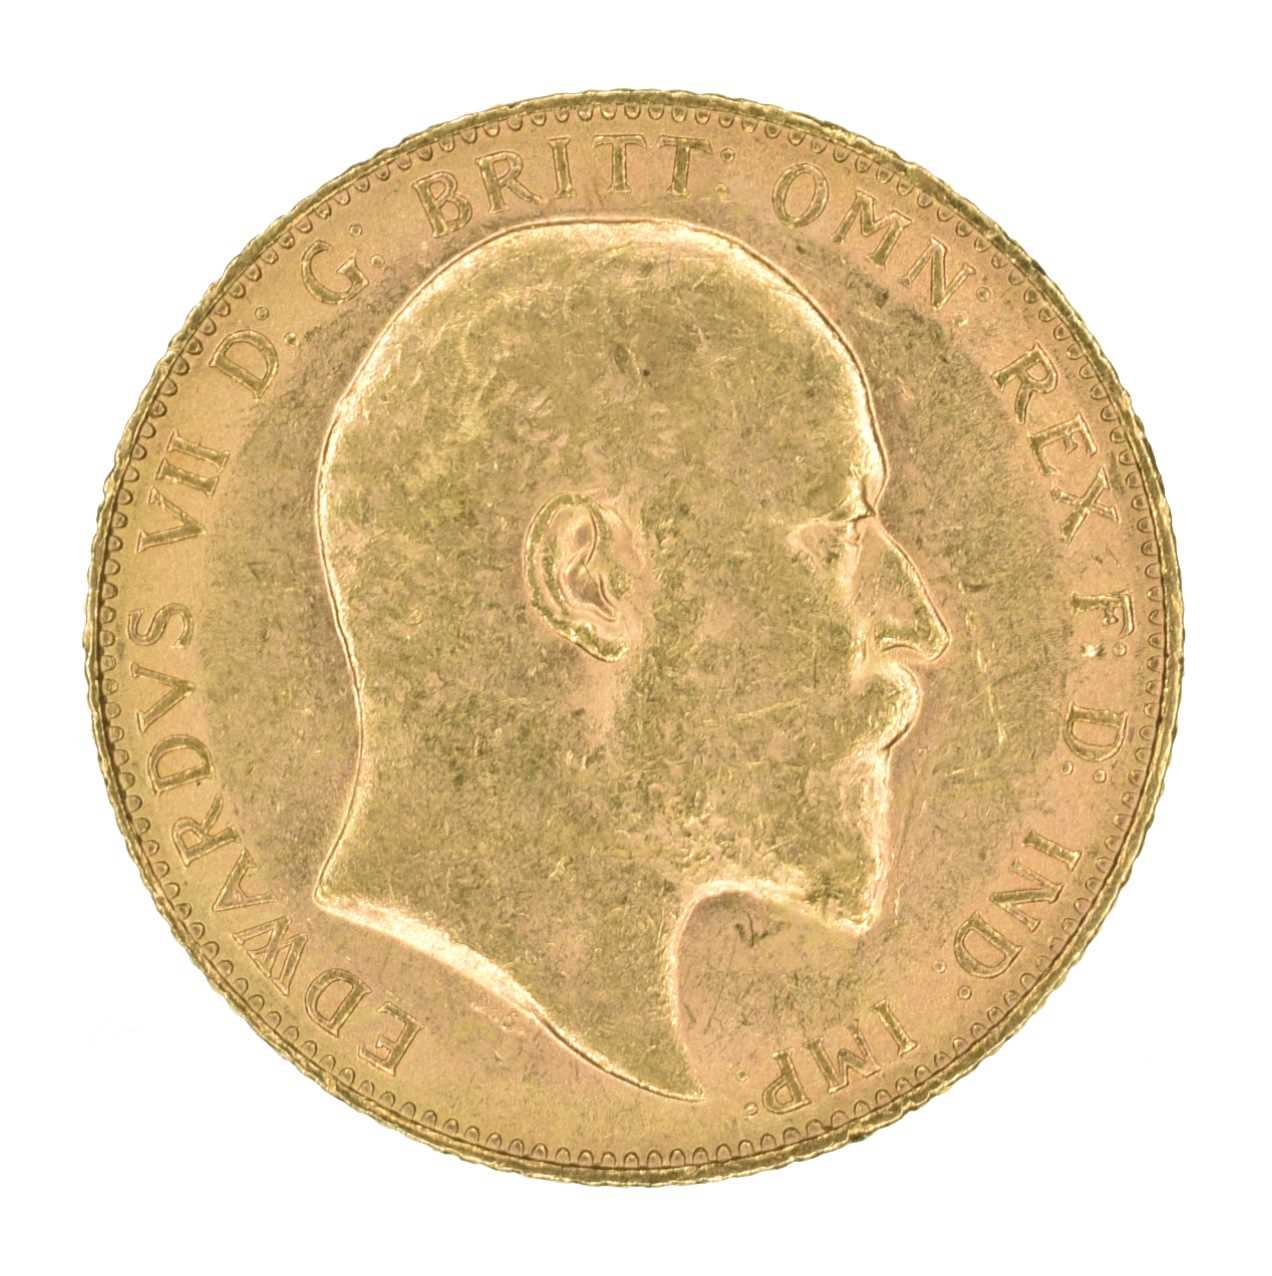 Lot 97 - King Edward VII, Sovereign, 1904, London Mint.